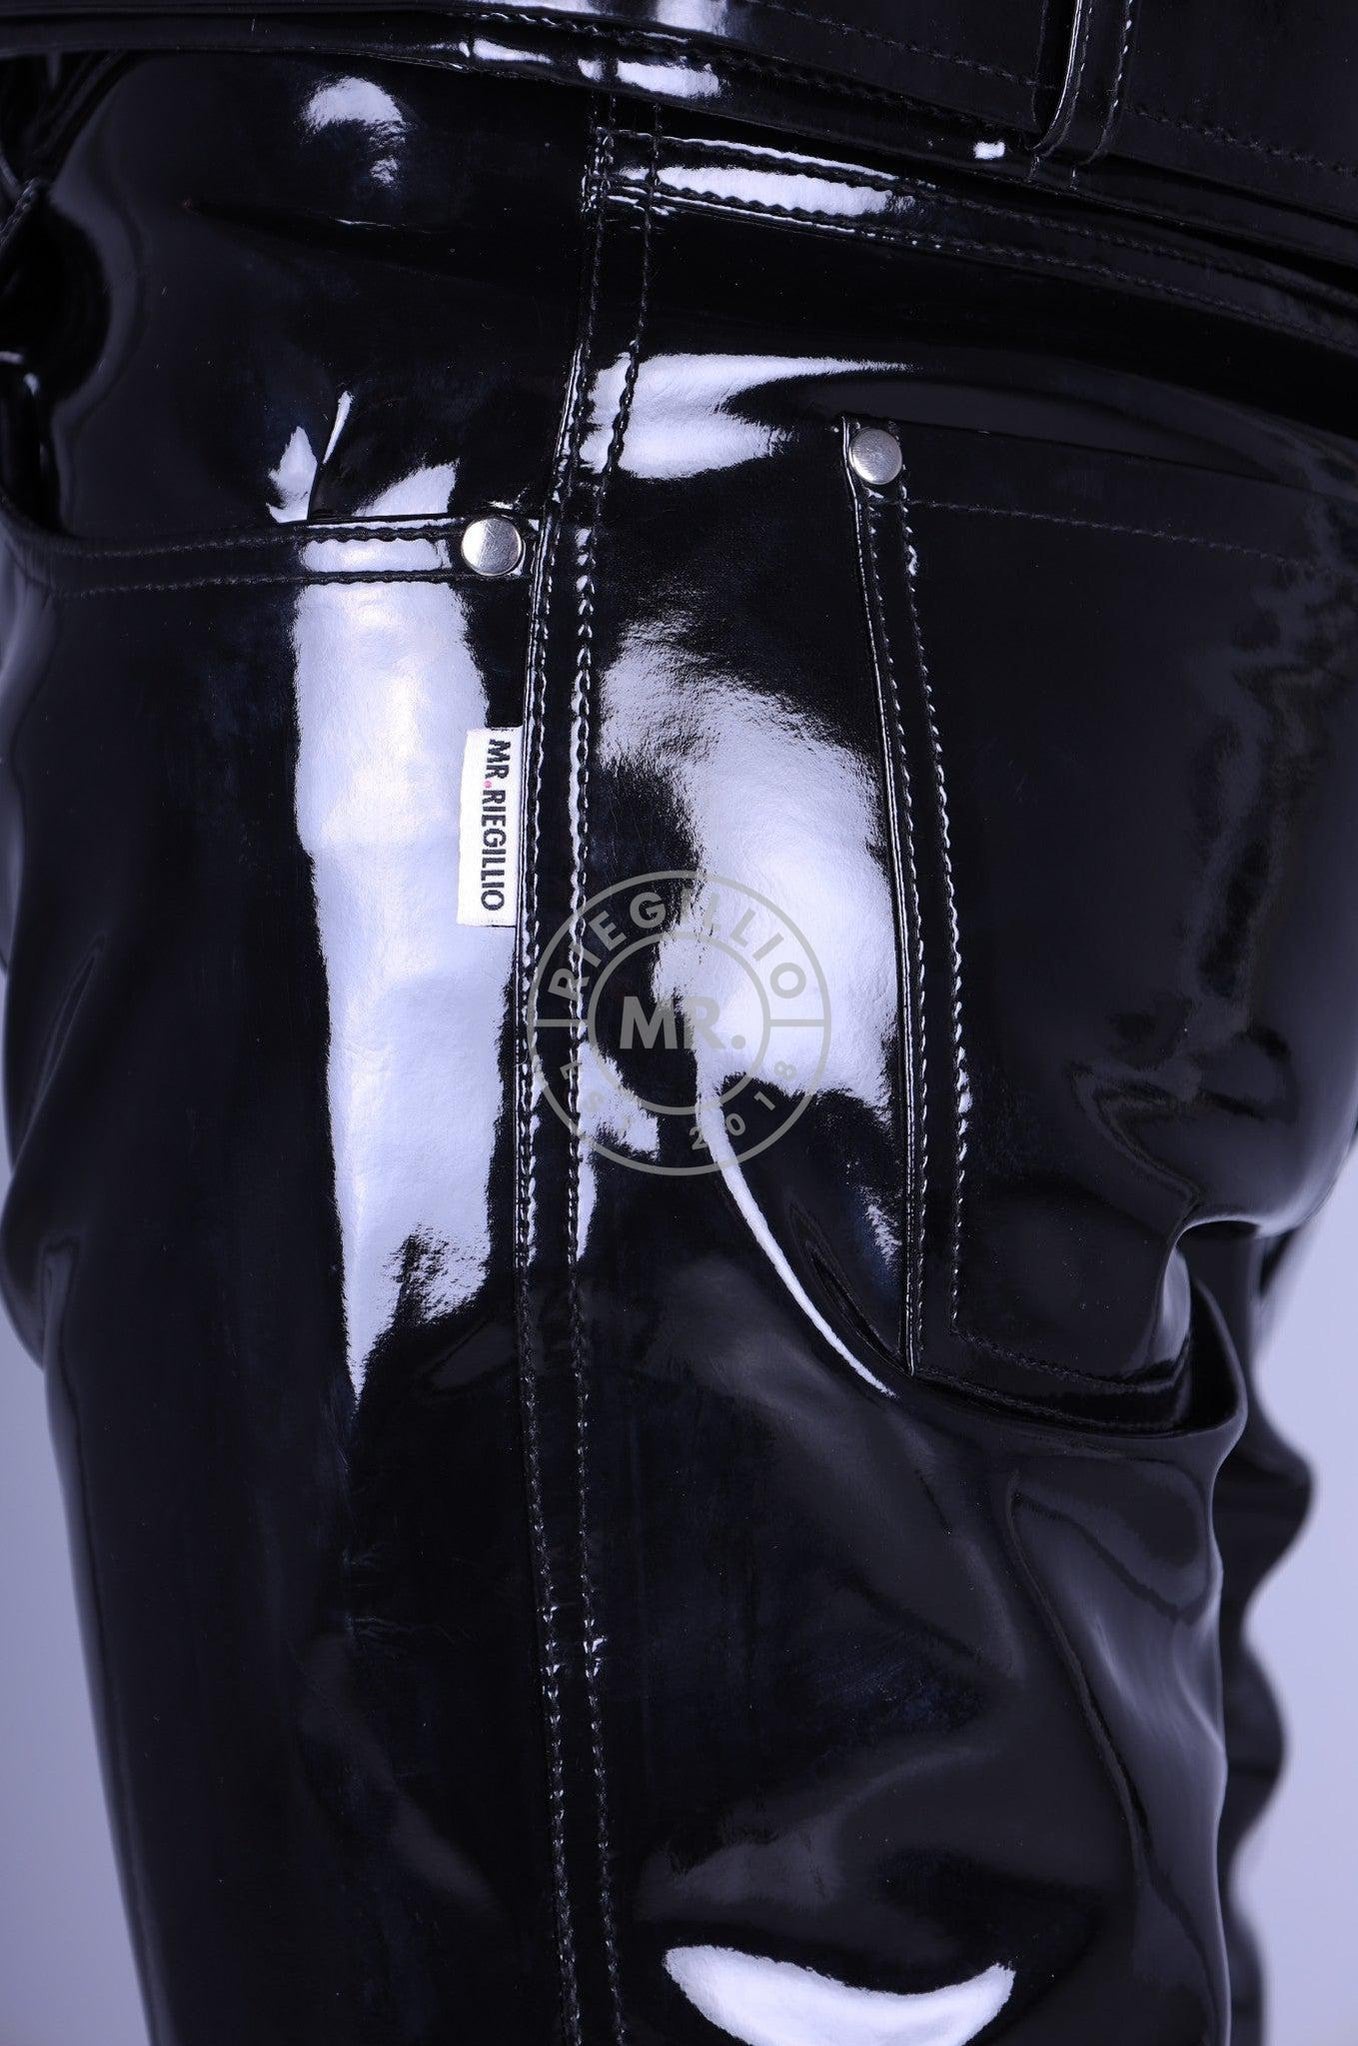 Heavy PVC Pants - Front Zippers at MR. Riegillio